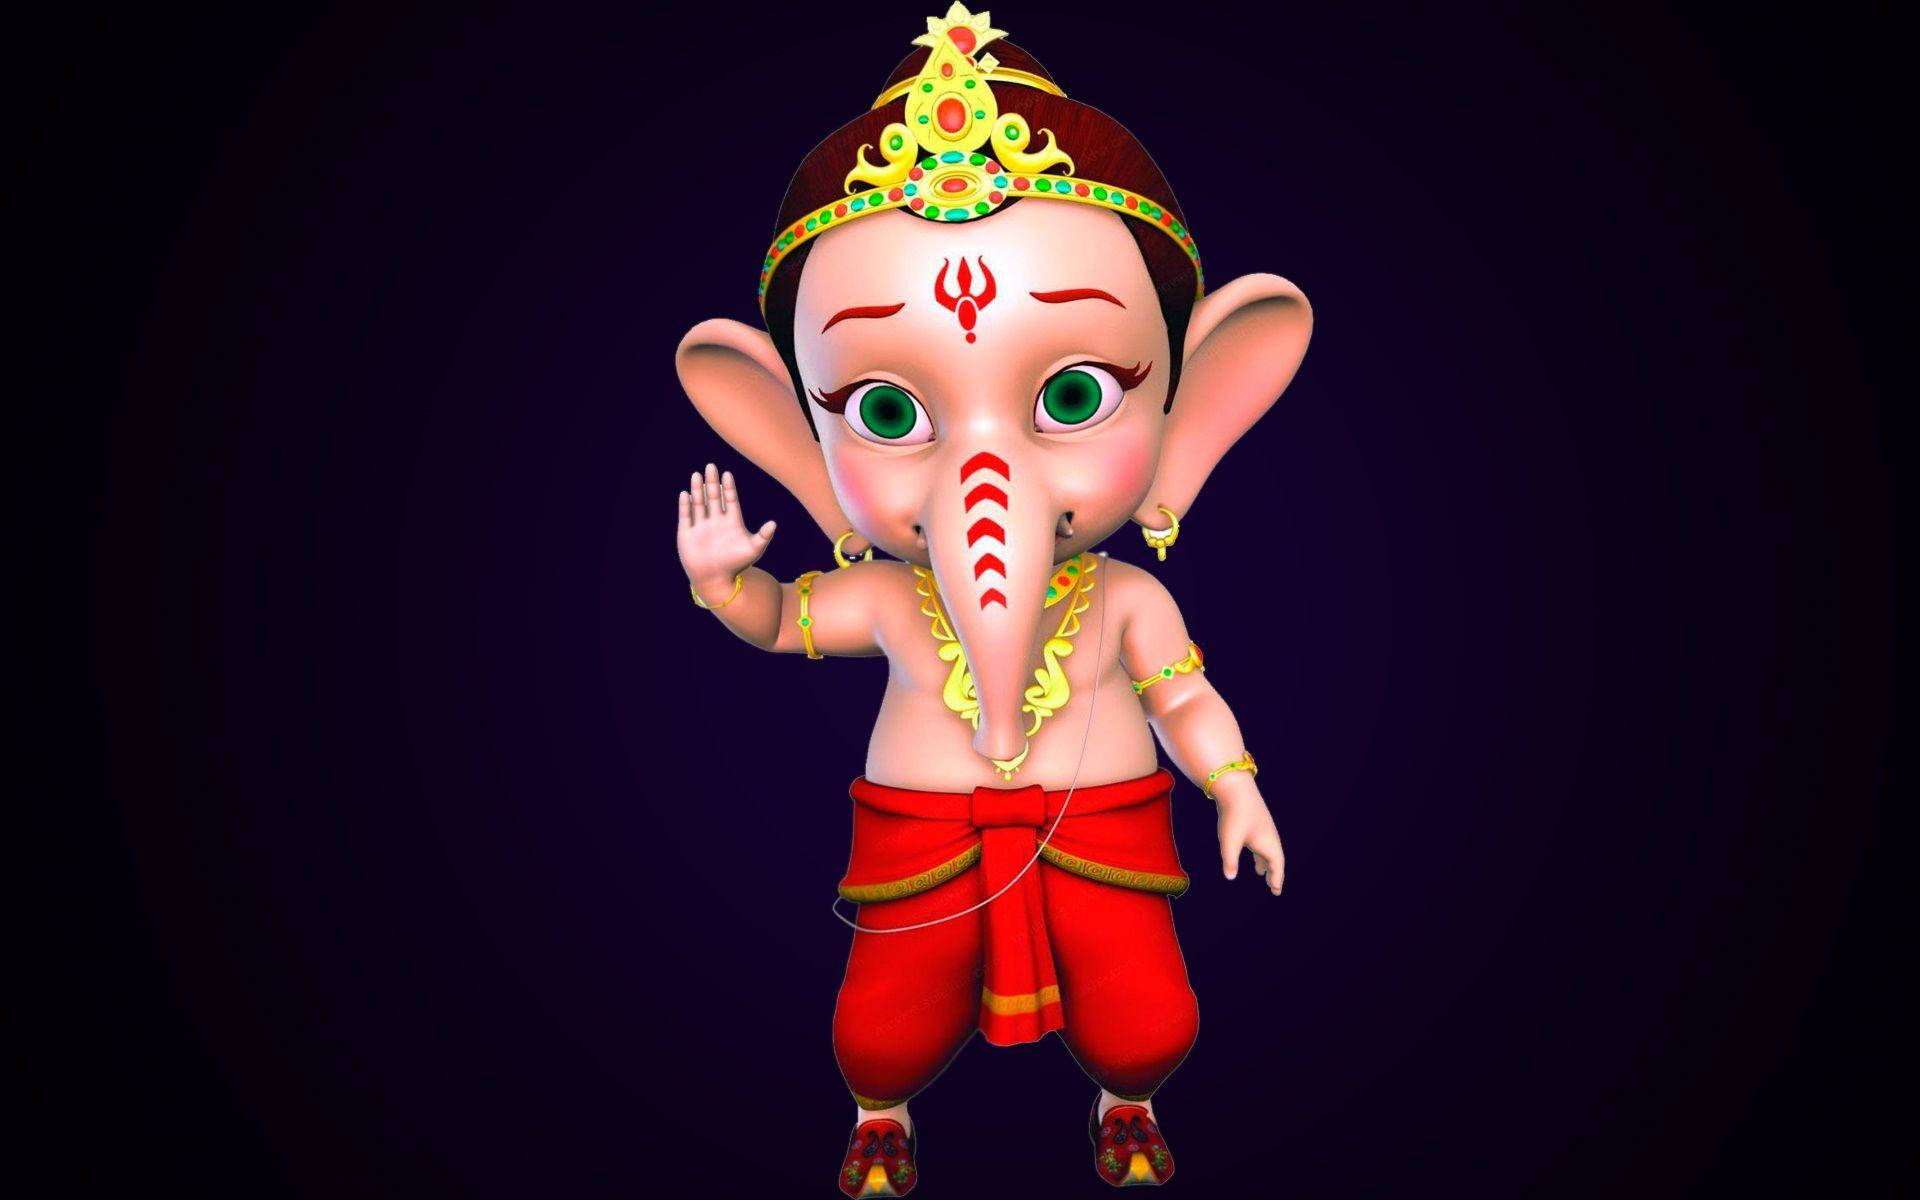 Free Ganesh 3d Wallpaper Downloads, [100+] Ganesh 3d Wallpapers for FREE |  